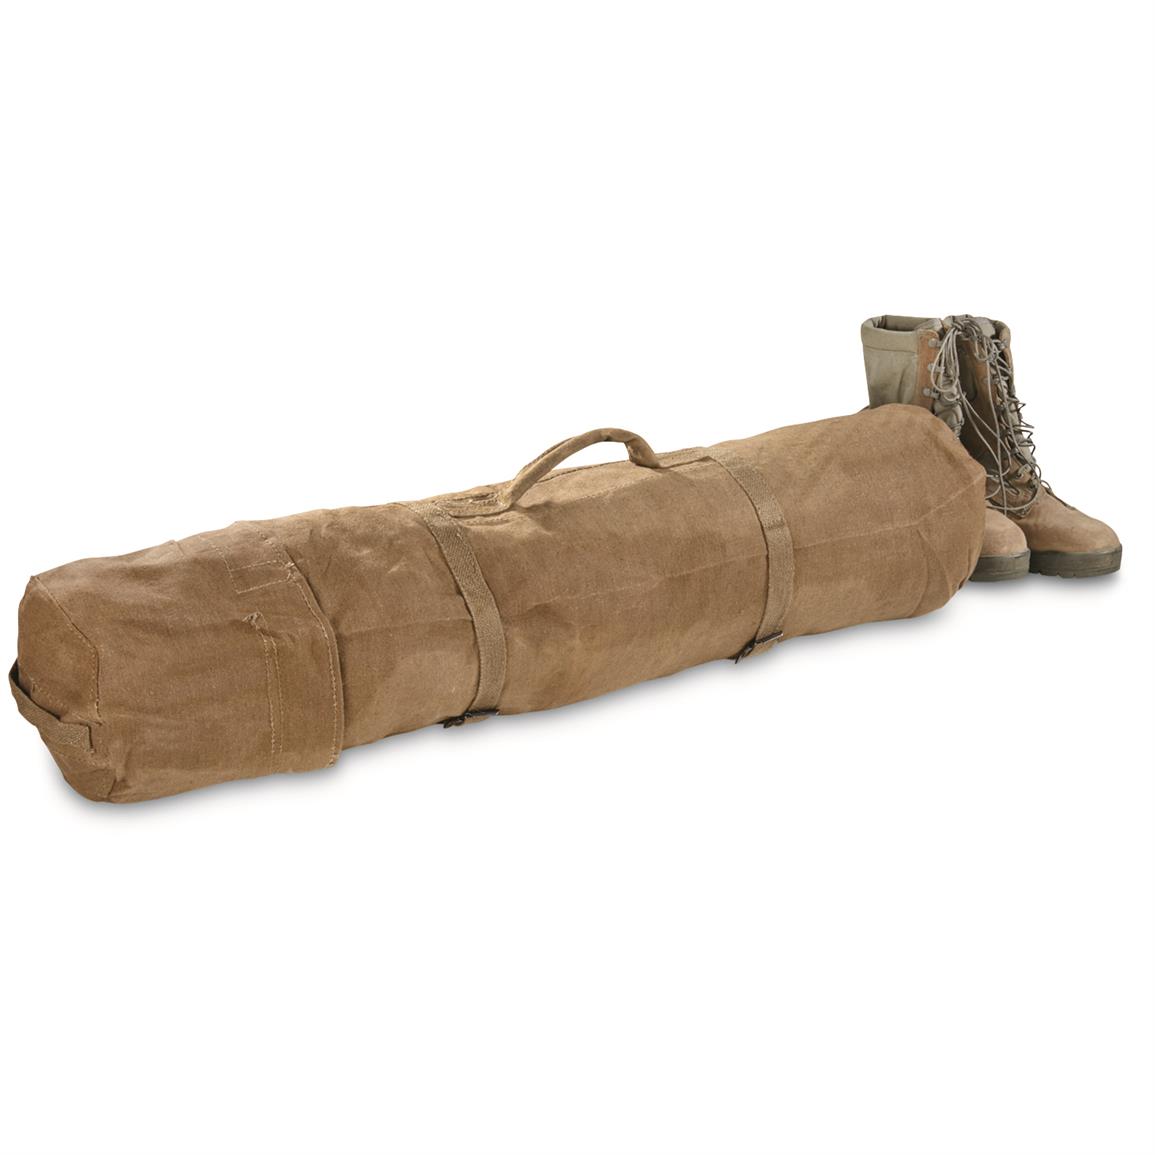 NATO Military Surplus Zipper Canvas Duffel Bag, Used - 667185, Duffle Bags at Sportsman&#39;s Guide